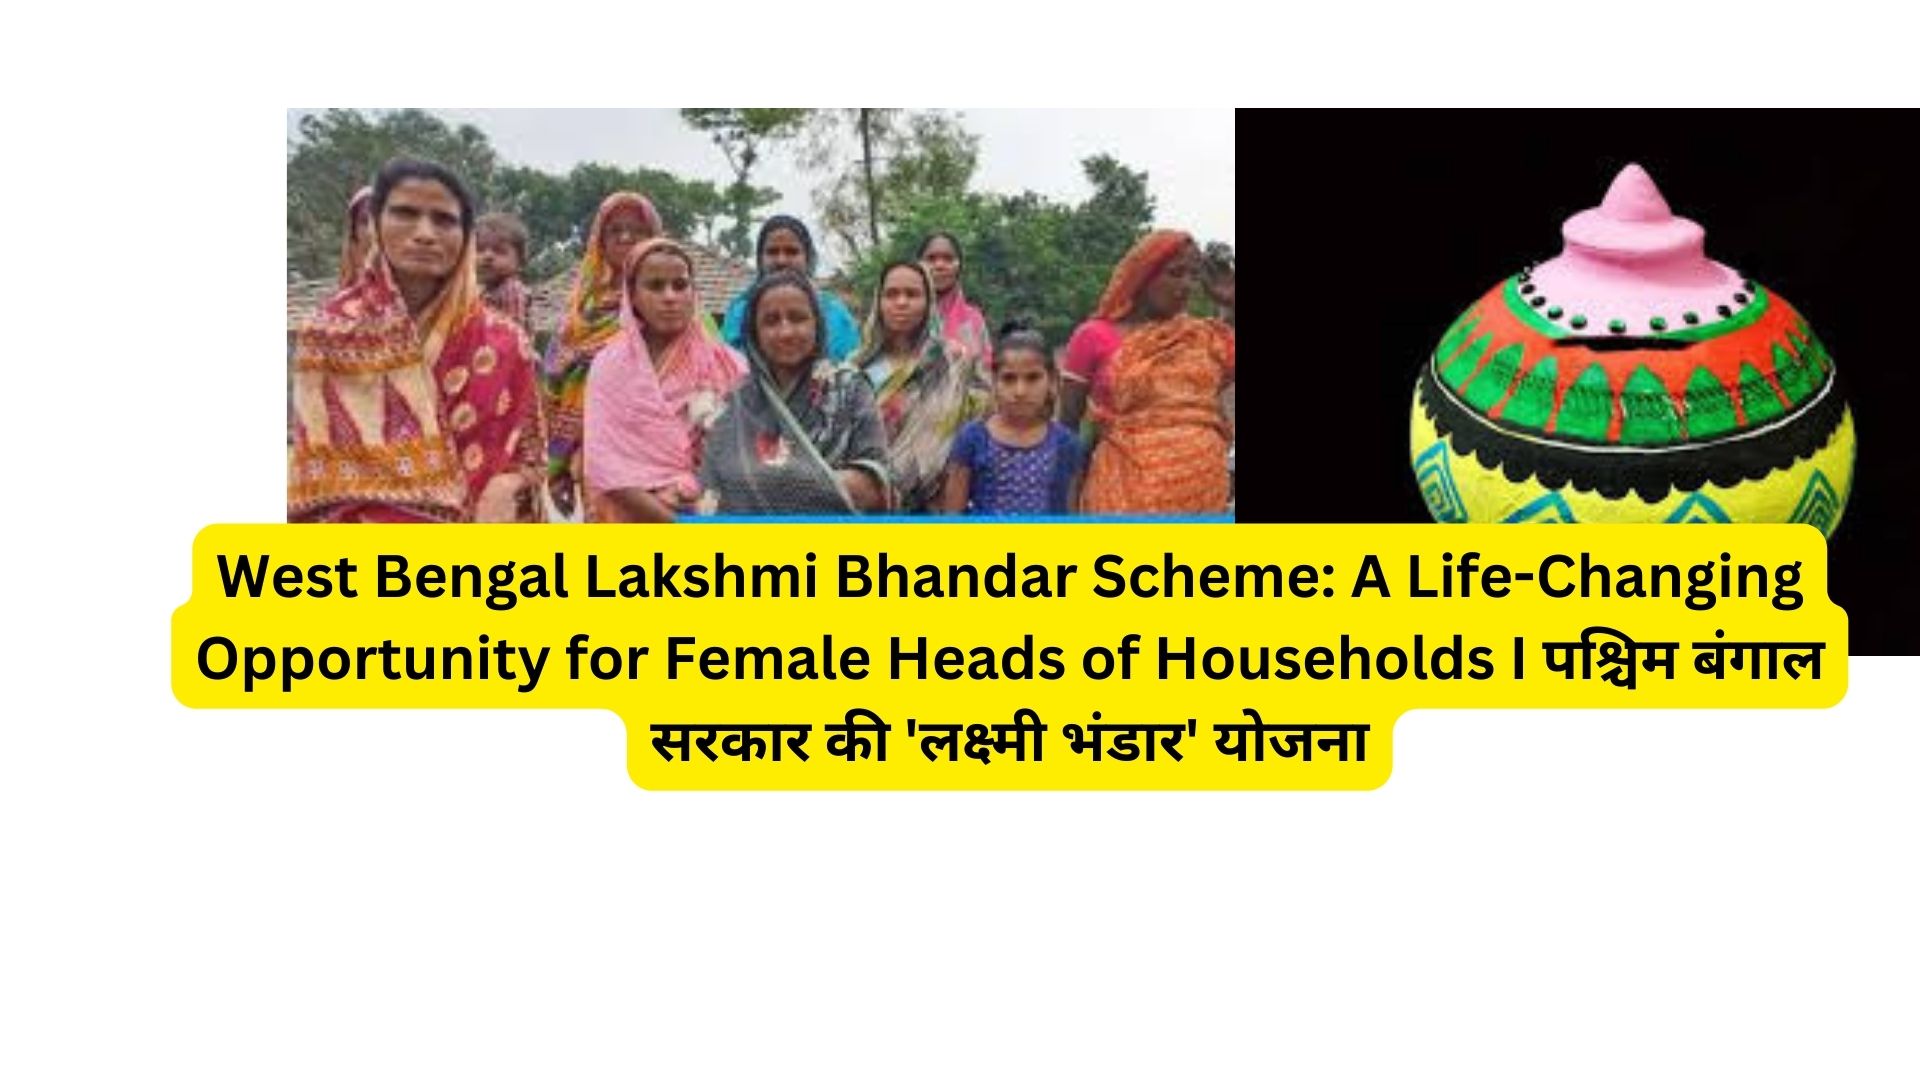 West Bengal Lakshmi Bhandar Scheme: A Life-Changing Opportunity for Female Heads of Households I पश्चिम बंगाल सरकार की 'लक्ष्मी भंडार' योजना